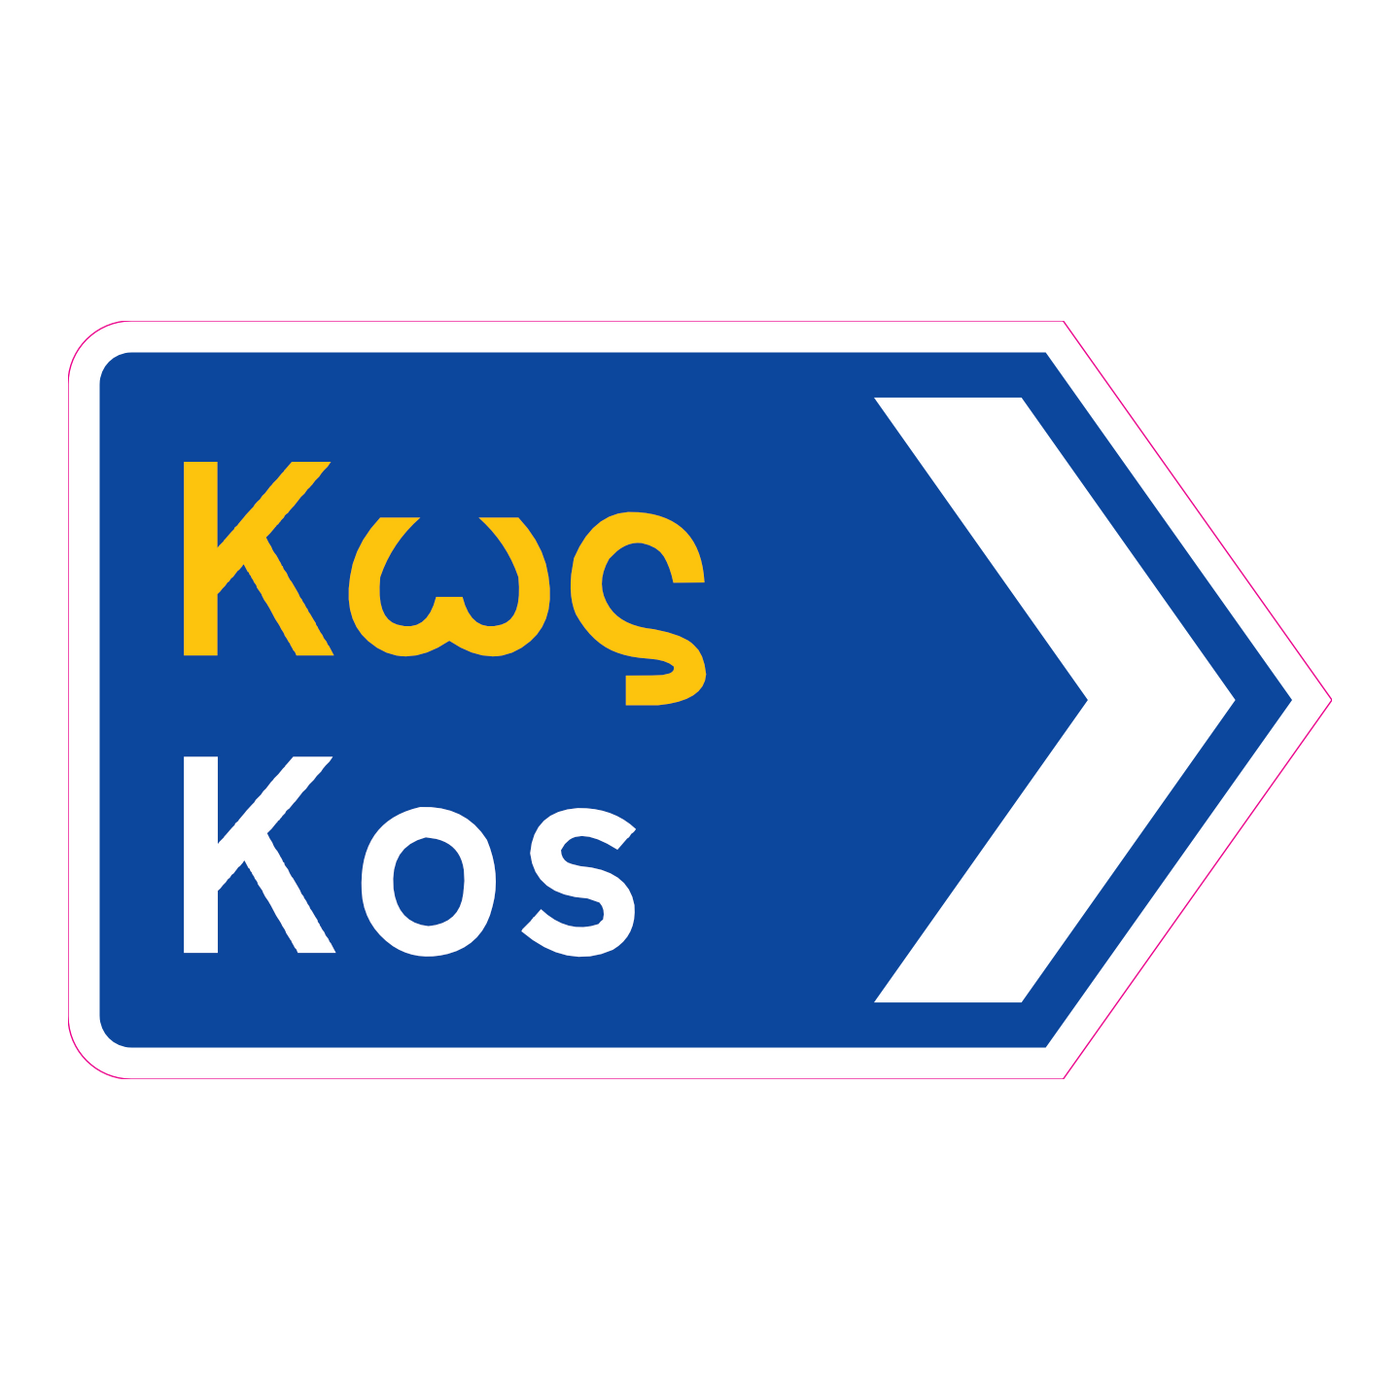 Kos Greek road sign